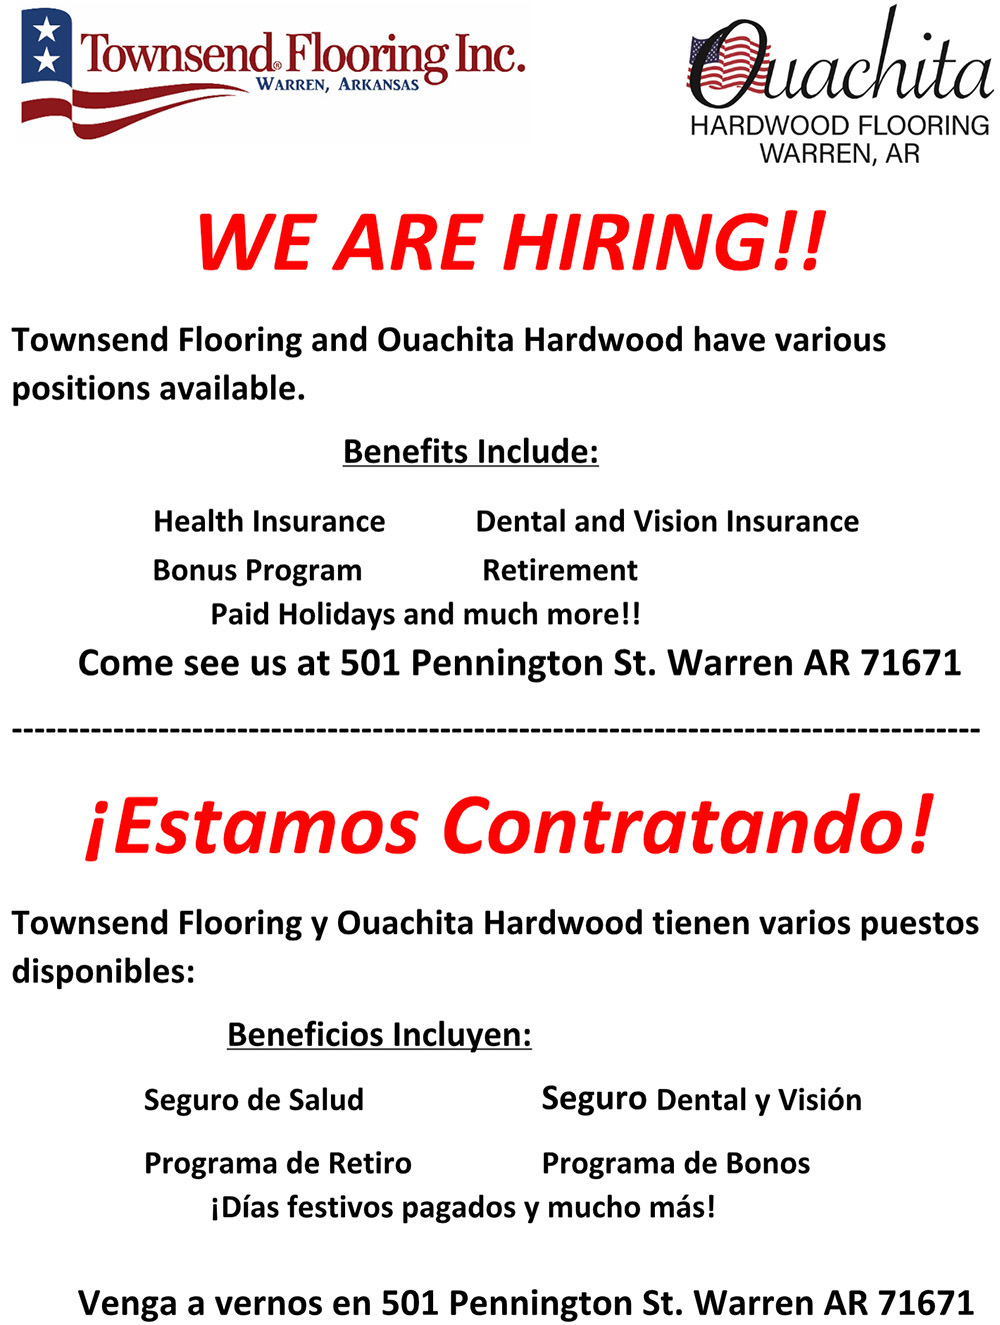 Townsend Flooring Inc. and Ouachita Hardwood Flooring